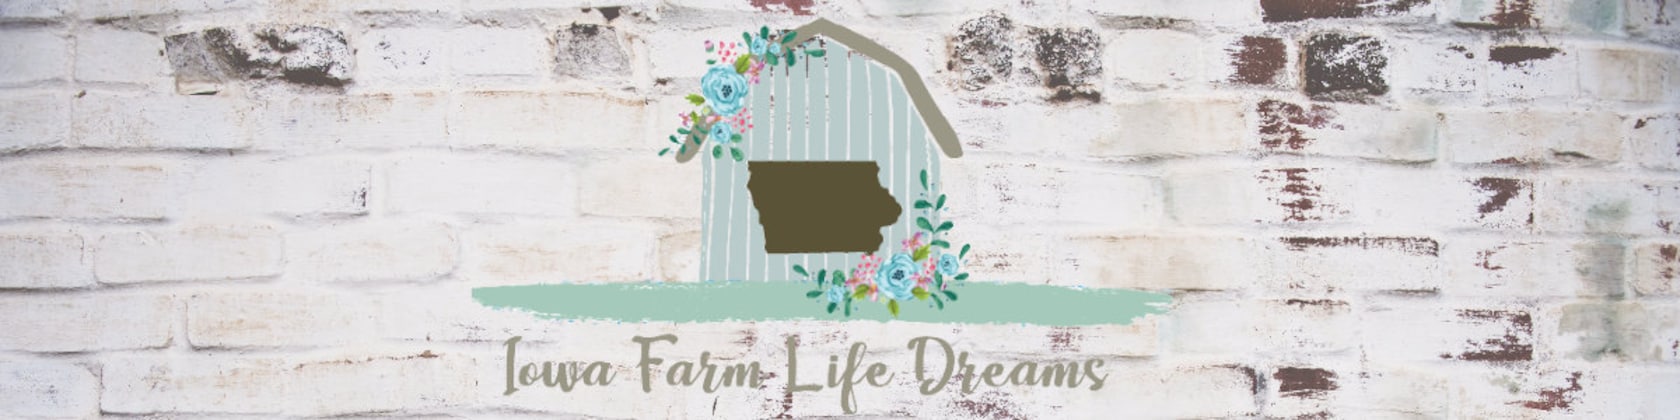 Pin on Iowa Farm Life Dreams on .com